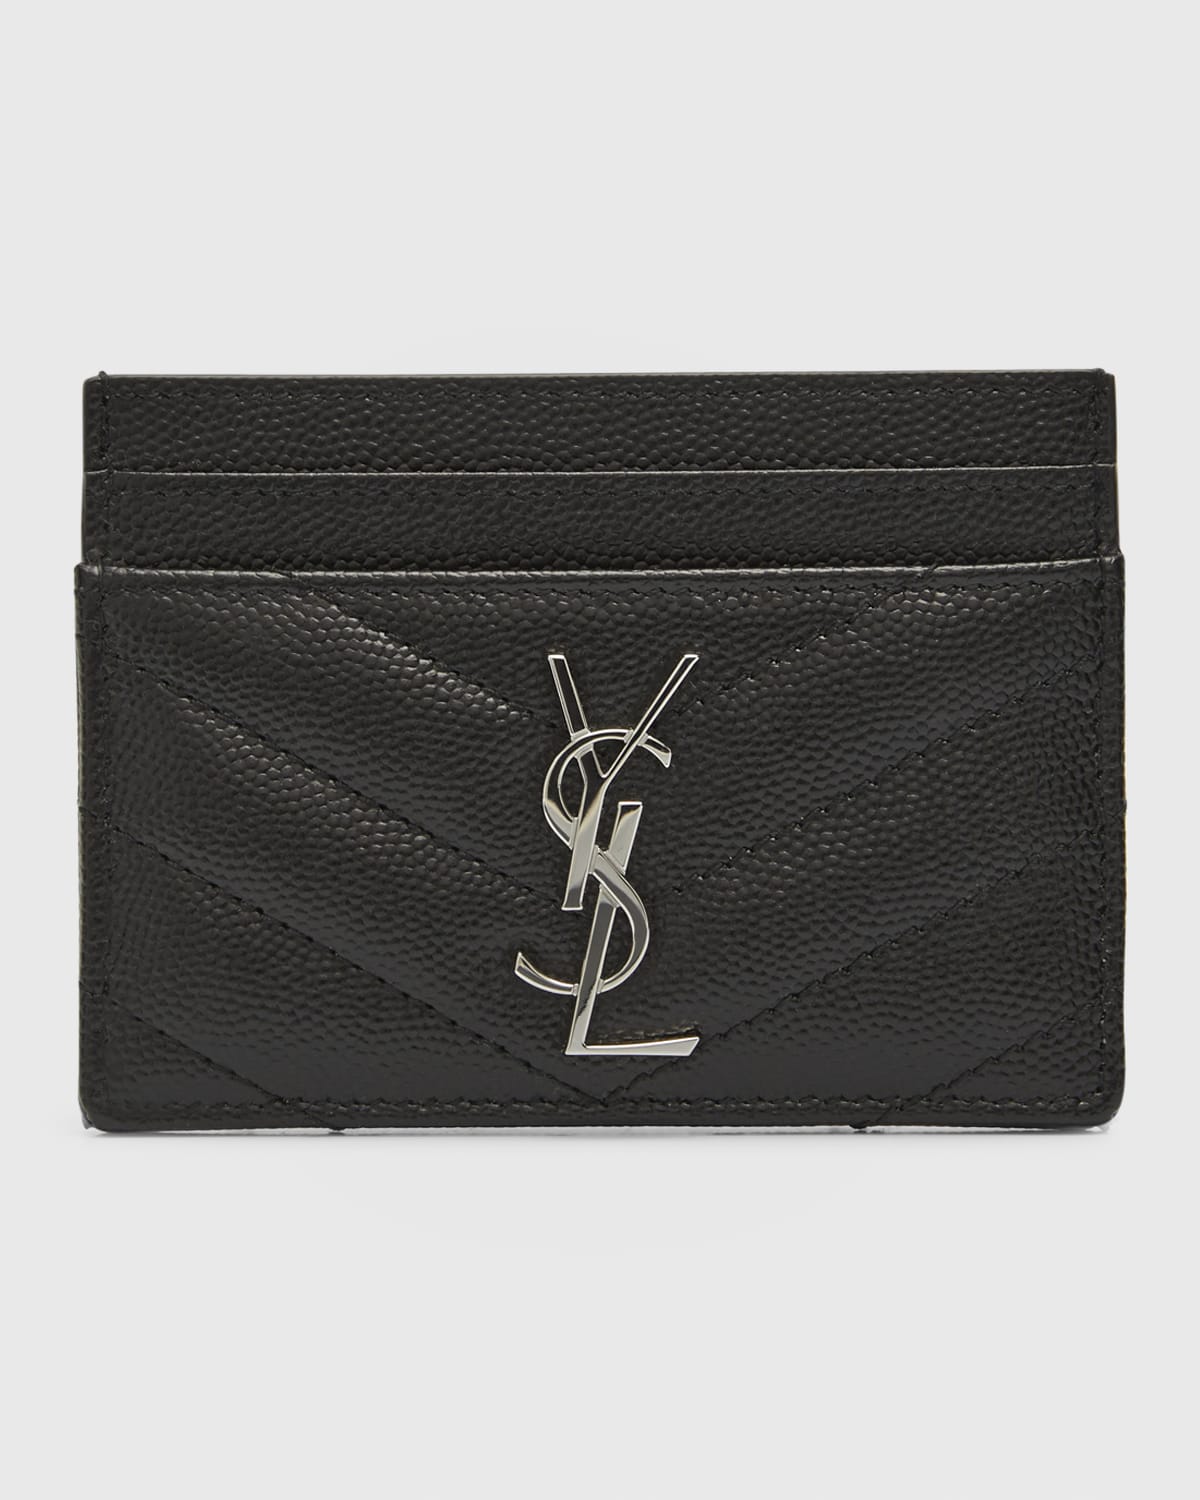 YSL Grain de Poudre Leather Card Case, Golden Hardware | Neiman Marcus